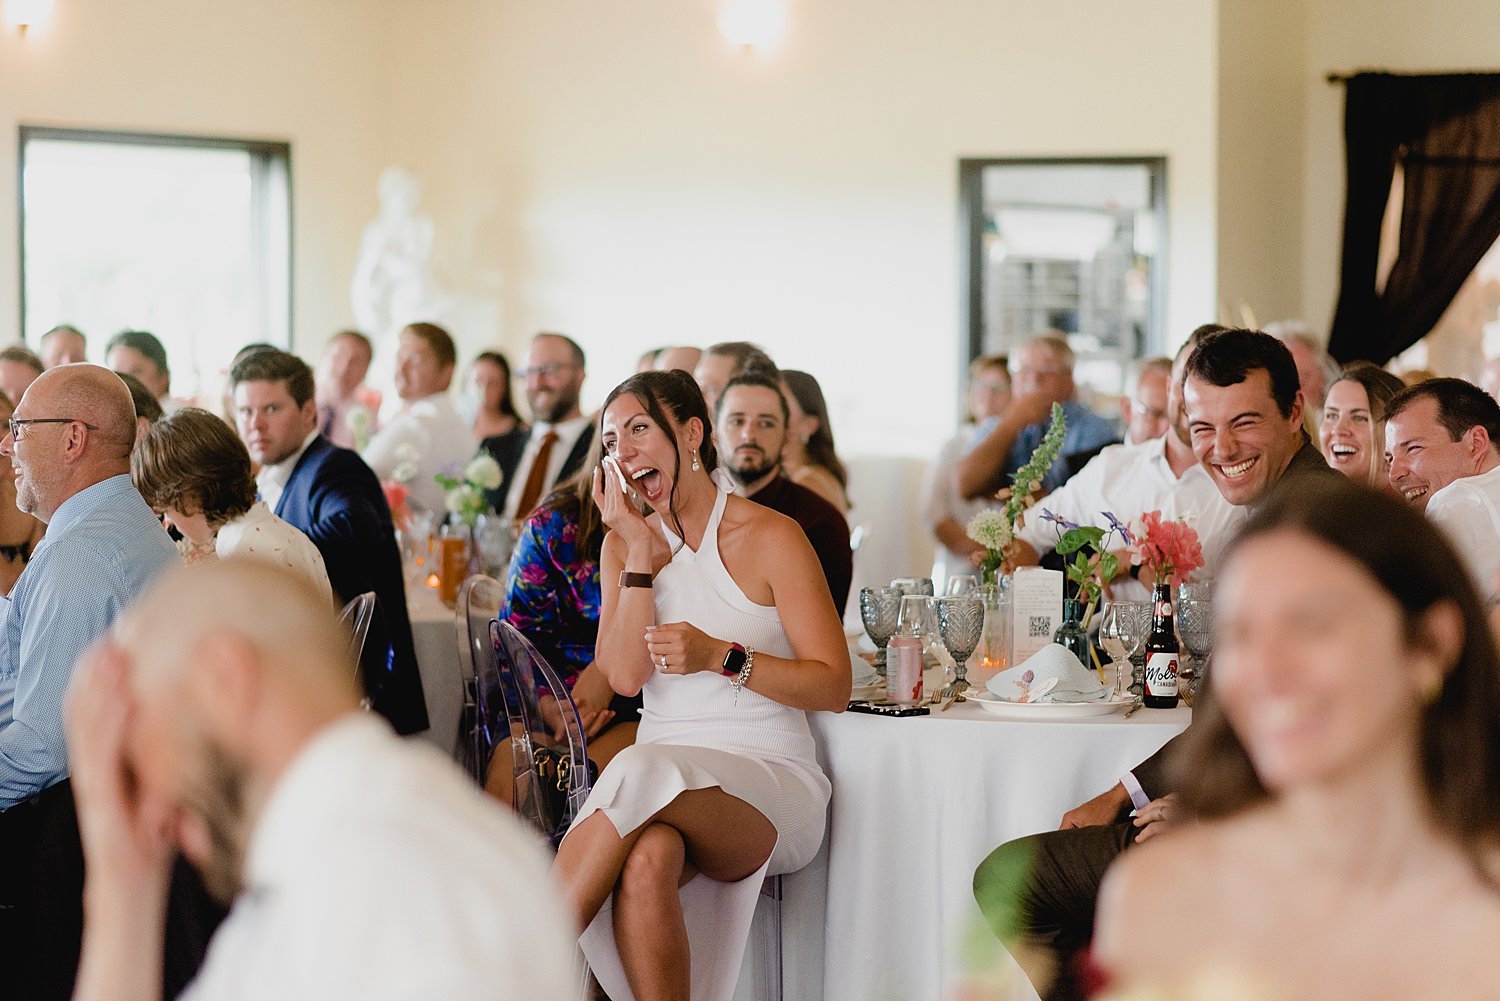 Casa Dea Winery Wedding in Prince Edward County | Prince Edward County Wedding Photographer | Holly McMurter Photographs_0152.jpg